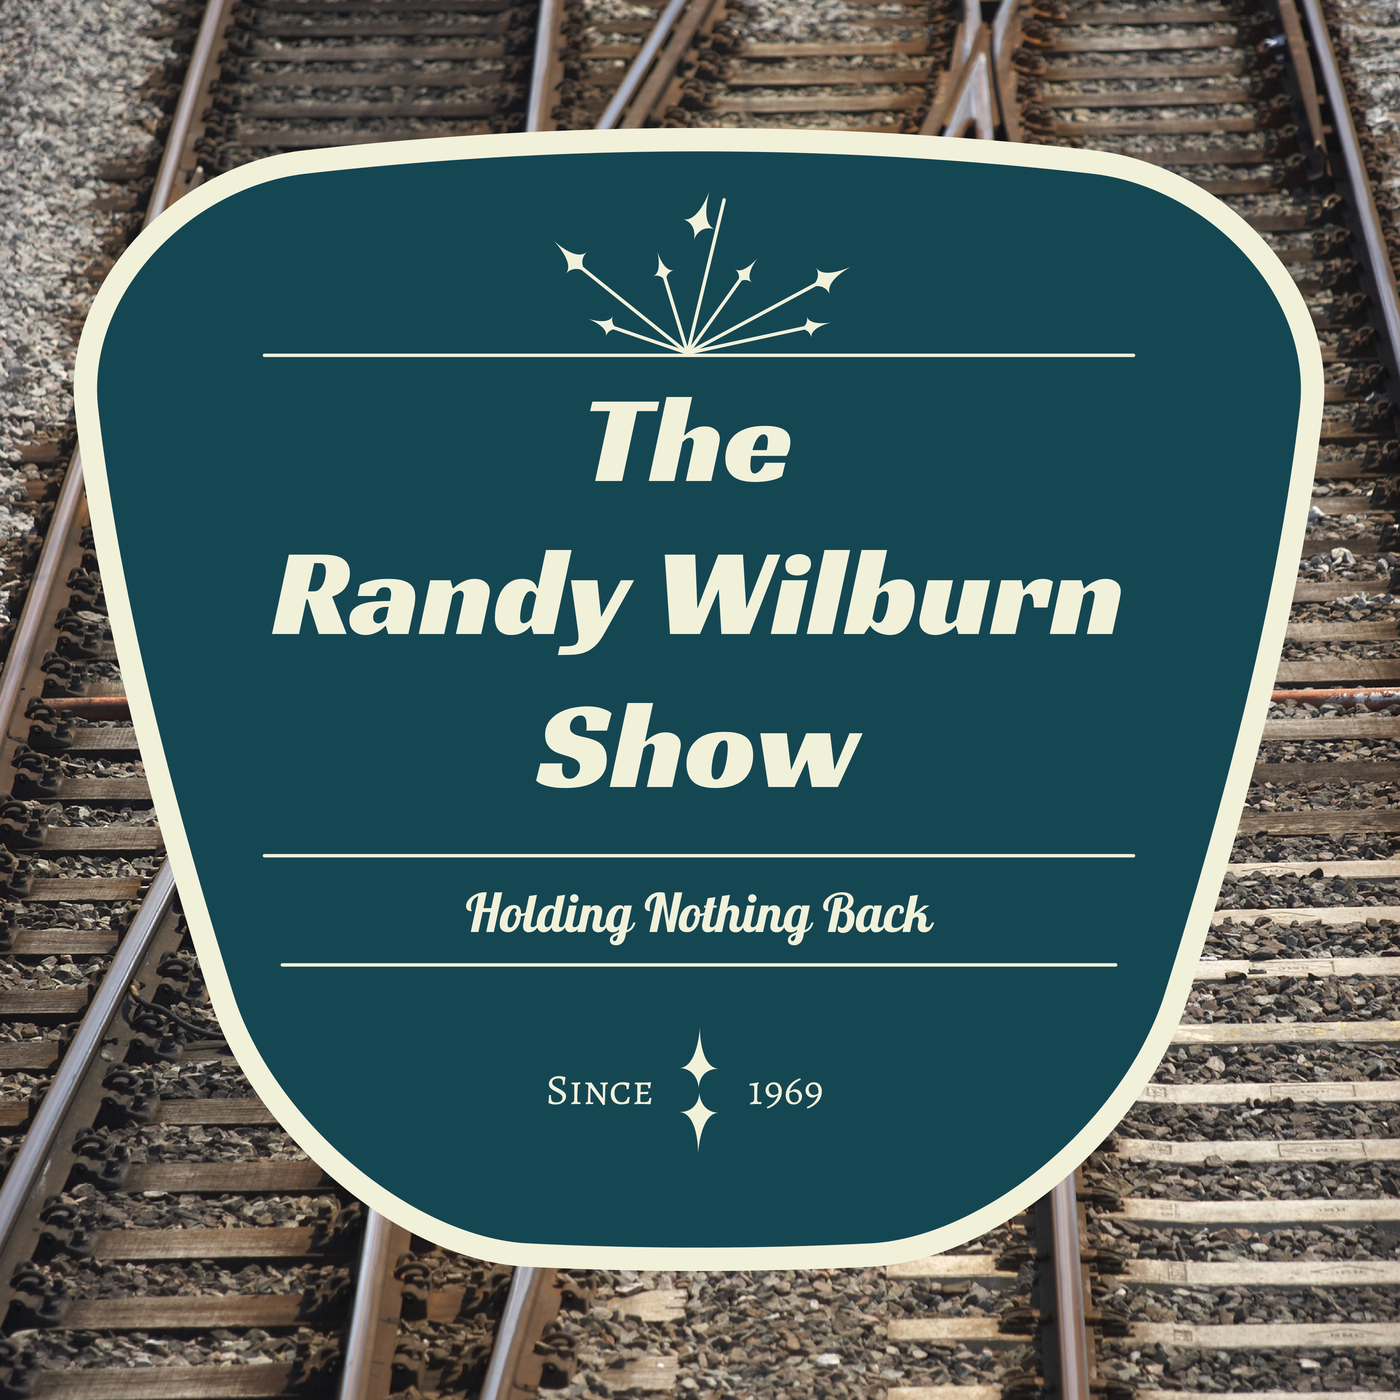 The Randy Wilburn Show